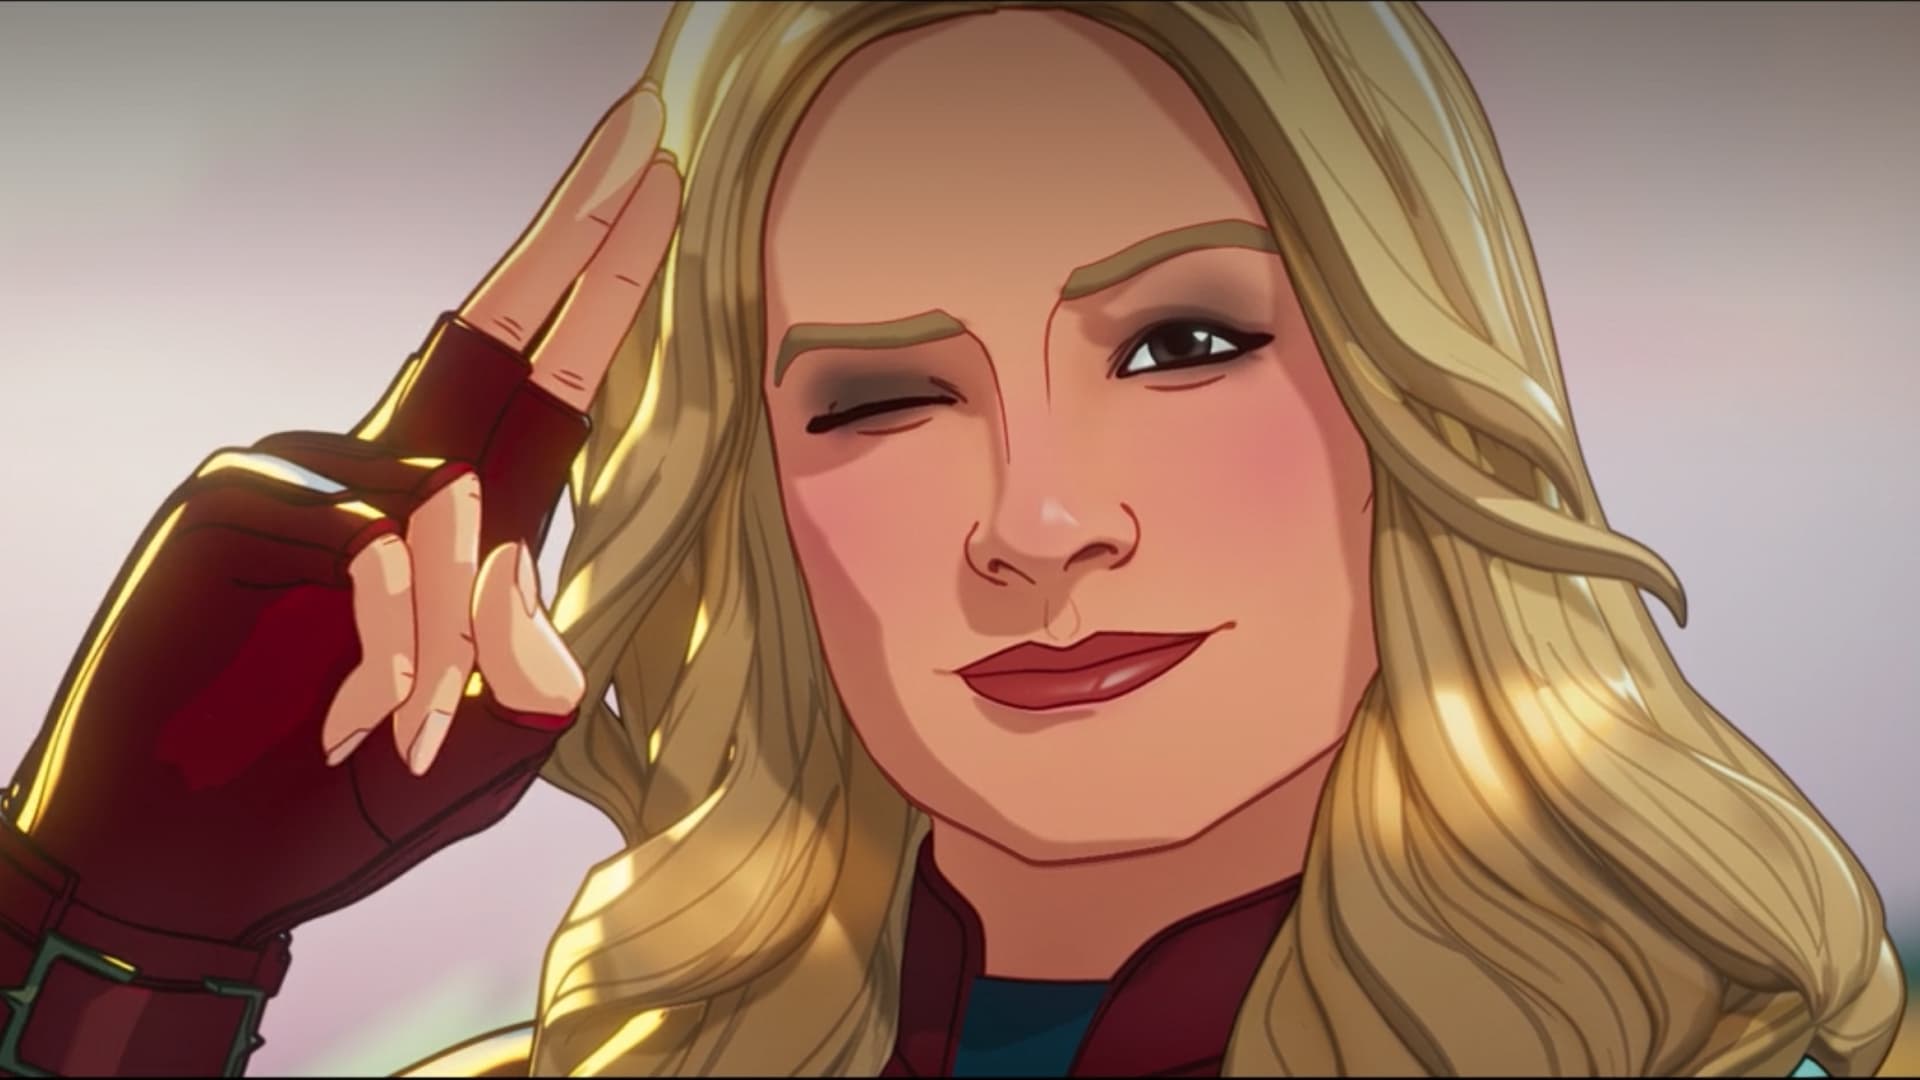 REVIEW Episodio 7 de What If: la fiesta de Thor para ver en Disney Plus